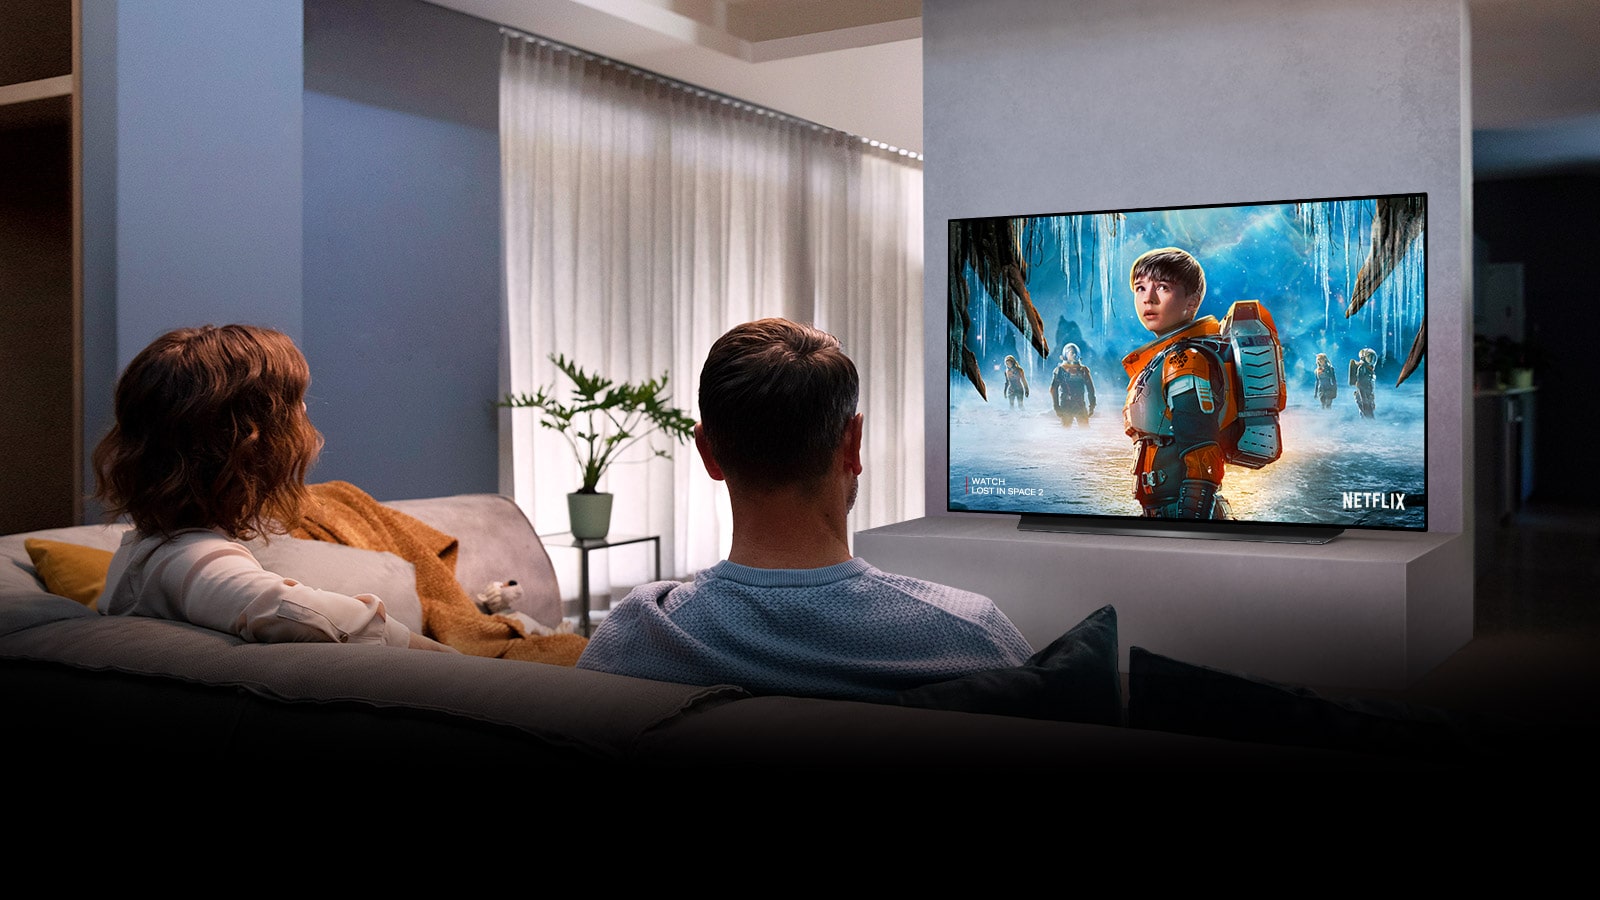 LG OLED TV 55'' 4K | Pixeles con Auto- Iluminación | UHD 4K SMART TV |  Ultra HD LED | Procesador α7 Gen 3 | ThinQ™ AI | Dolby Vision- Atmos | LG  Centroamérica y el Caribe